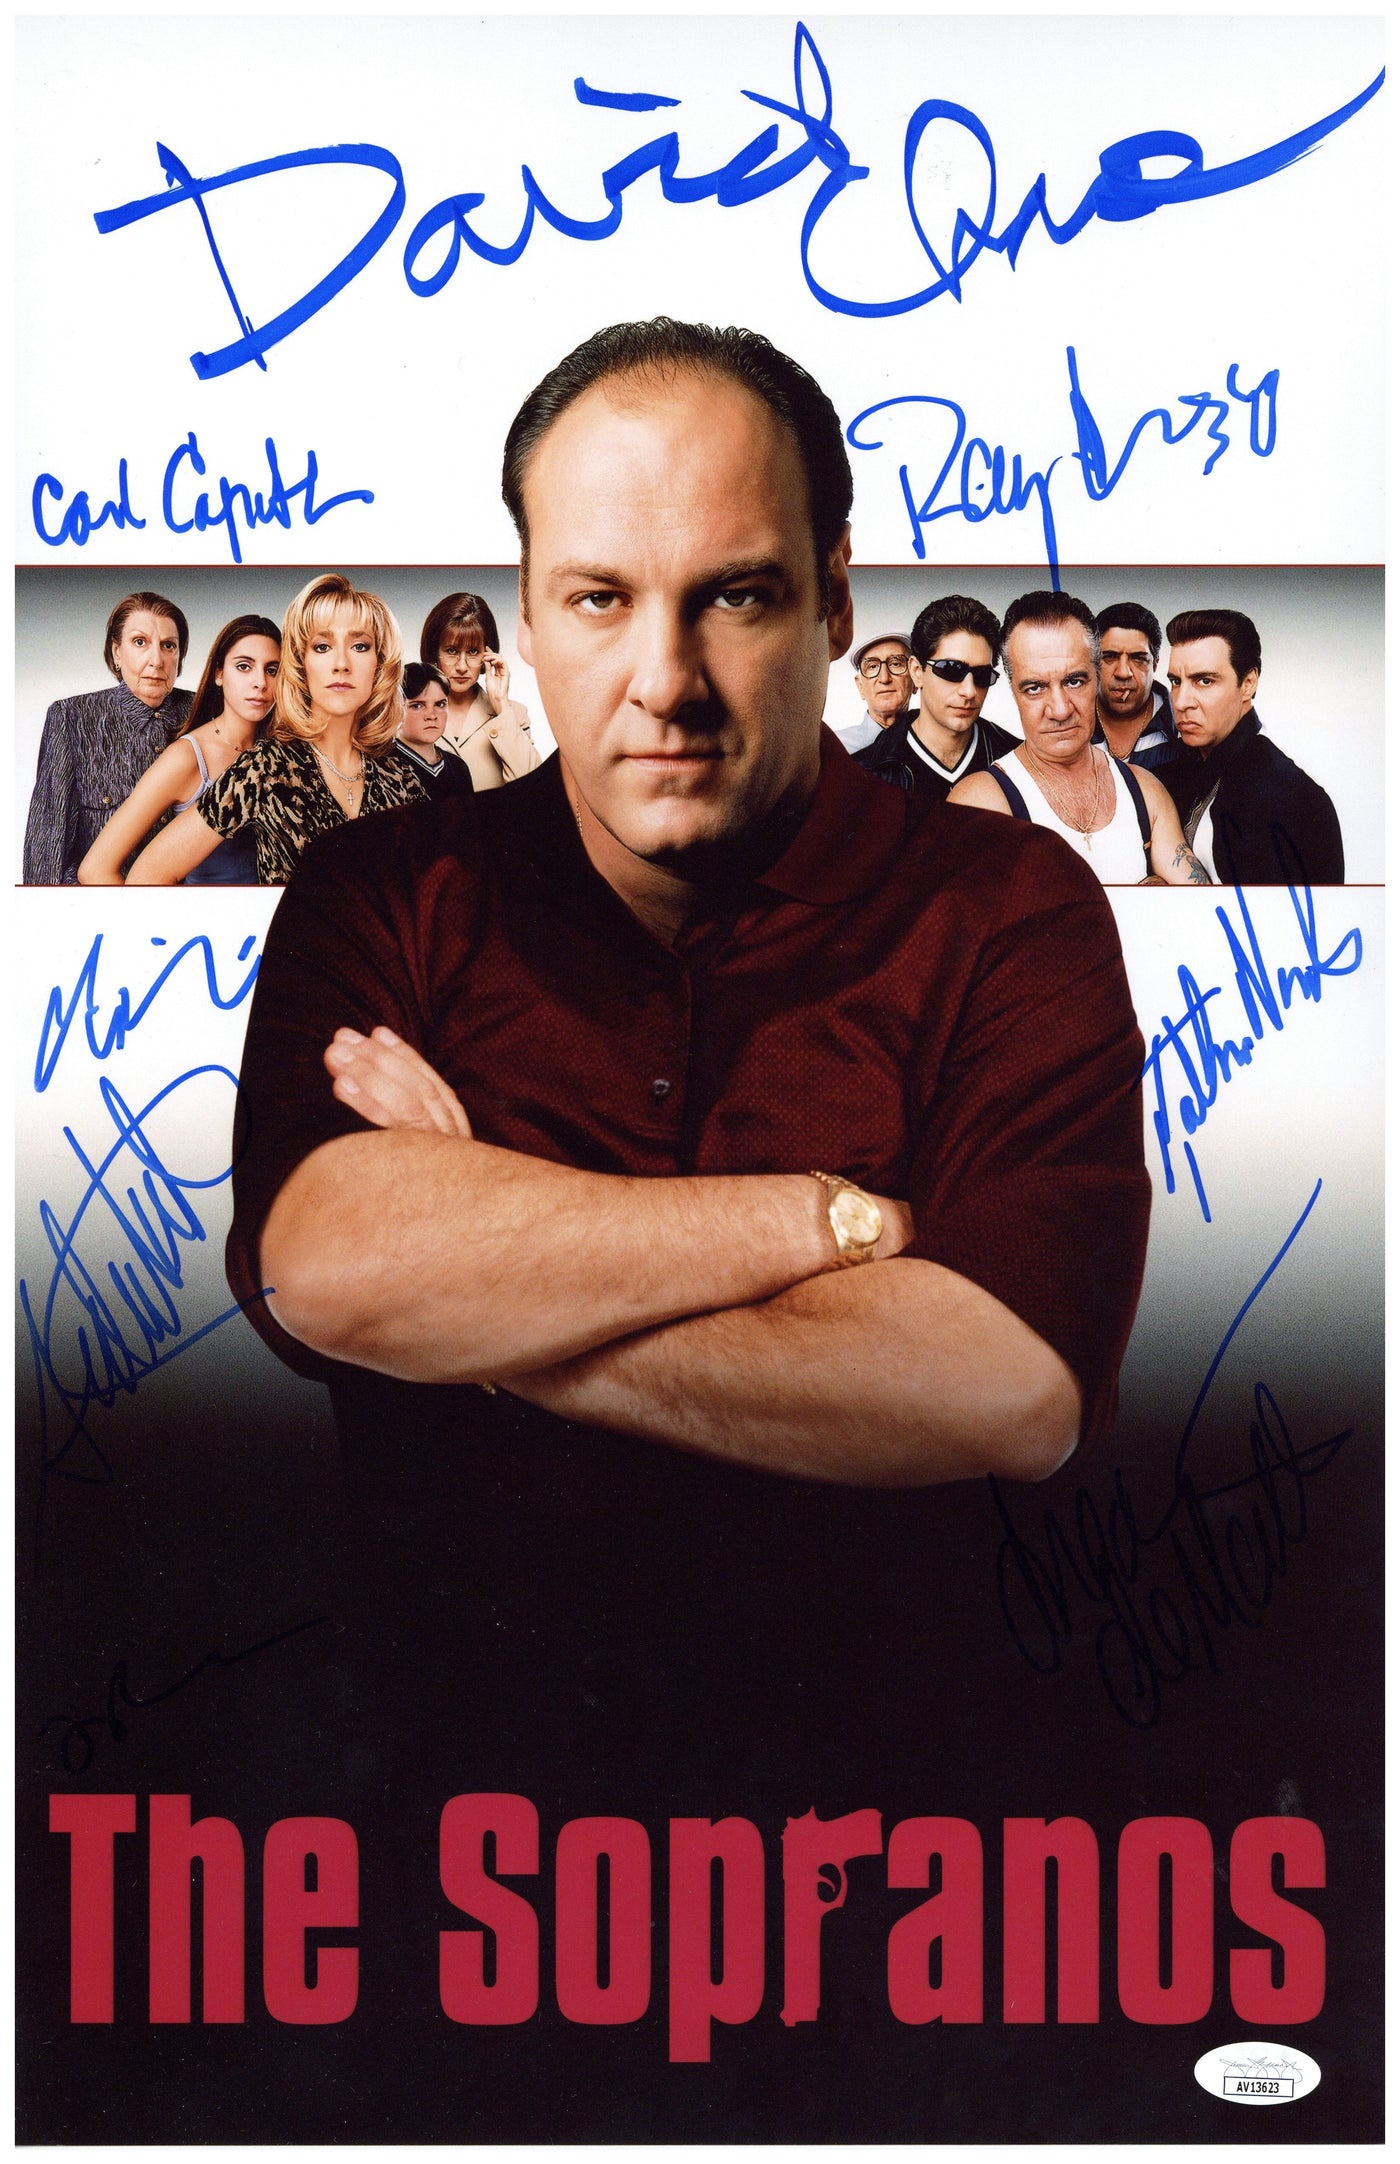 Sopranos Cast Signed 11x17 Photo Signed by 8 Autographed JSA COA #3